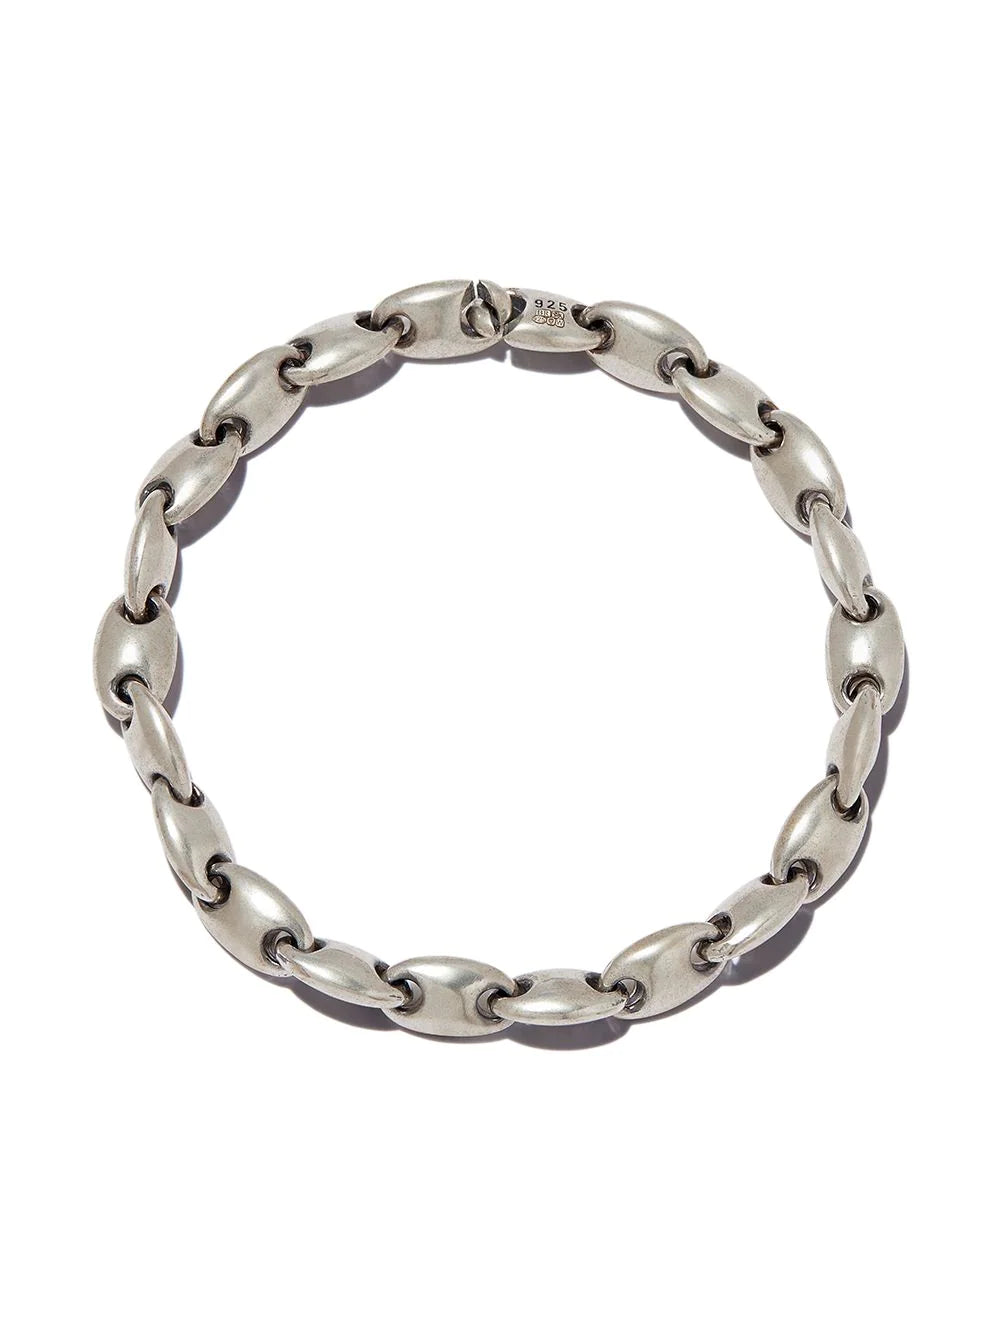 M. Cohen Grandia Neo chain bracelet